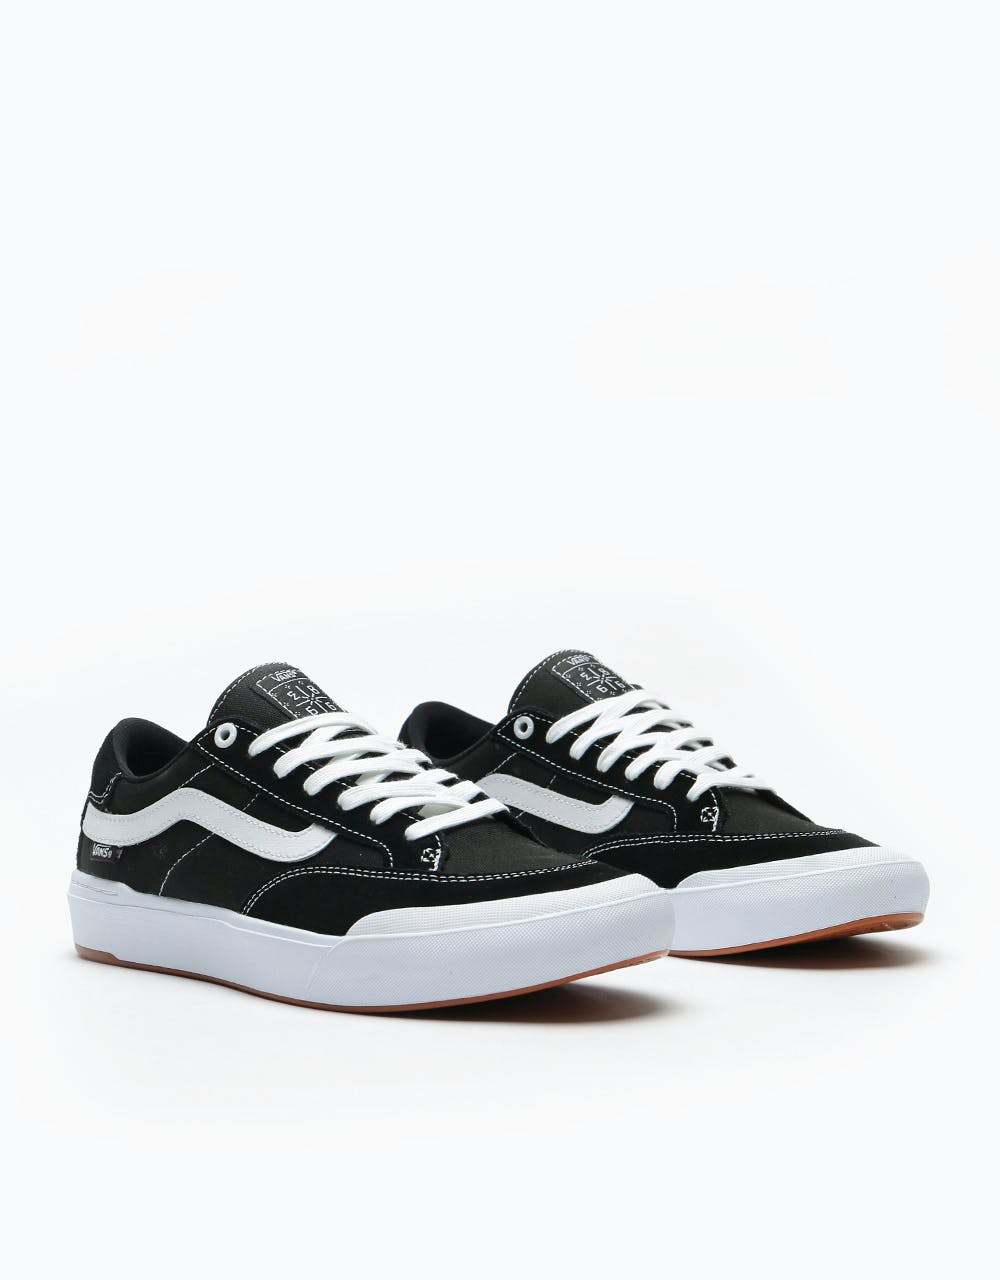 Vans Berle Pro Skate Shoes - Black/True White